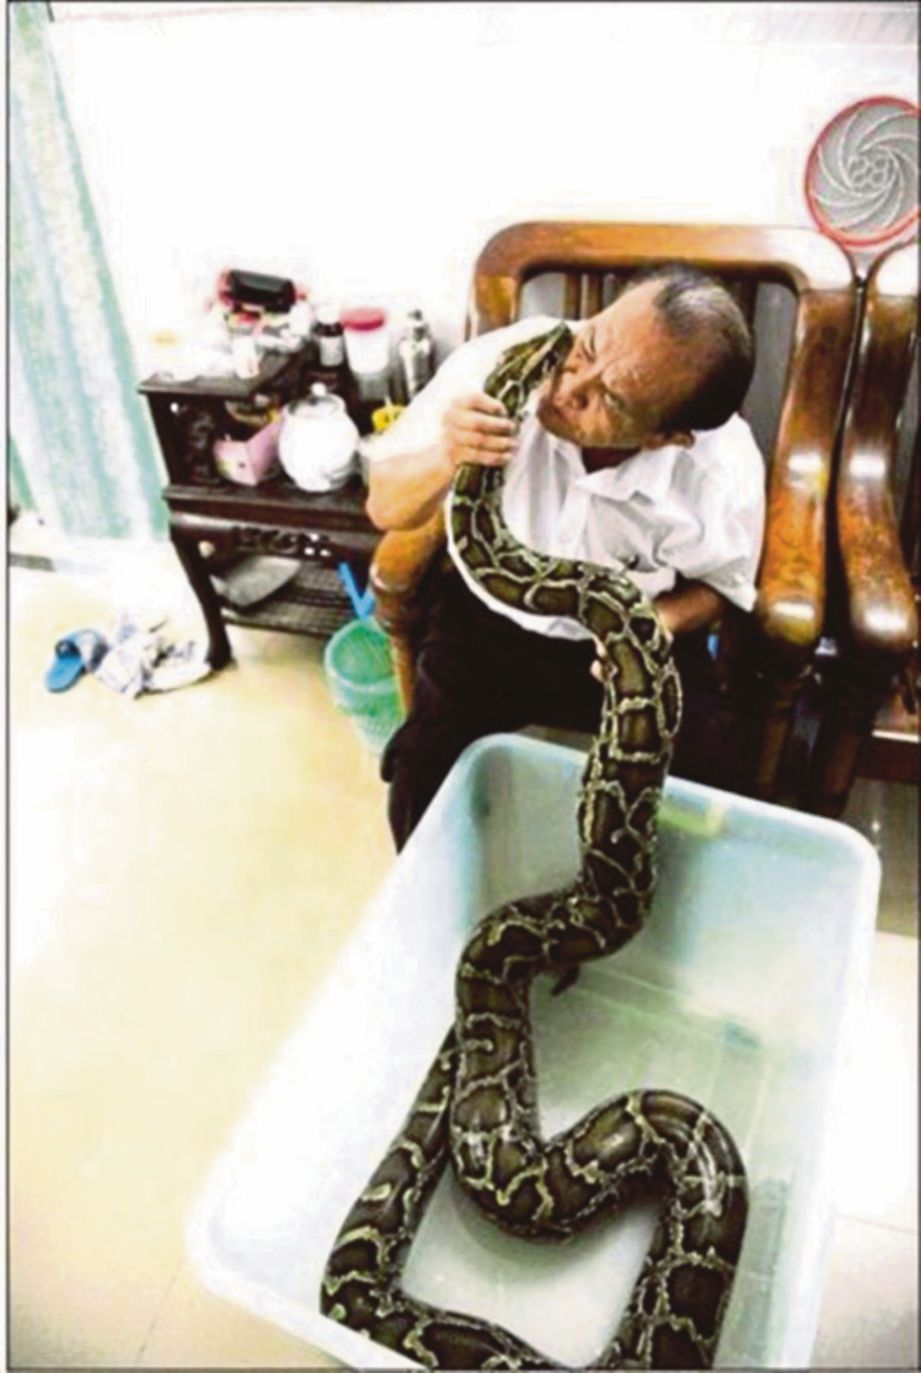 SHI mencium ular sawa peliharaannya selepas memandikan reptilia itu di rumahnya. - Agensi